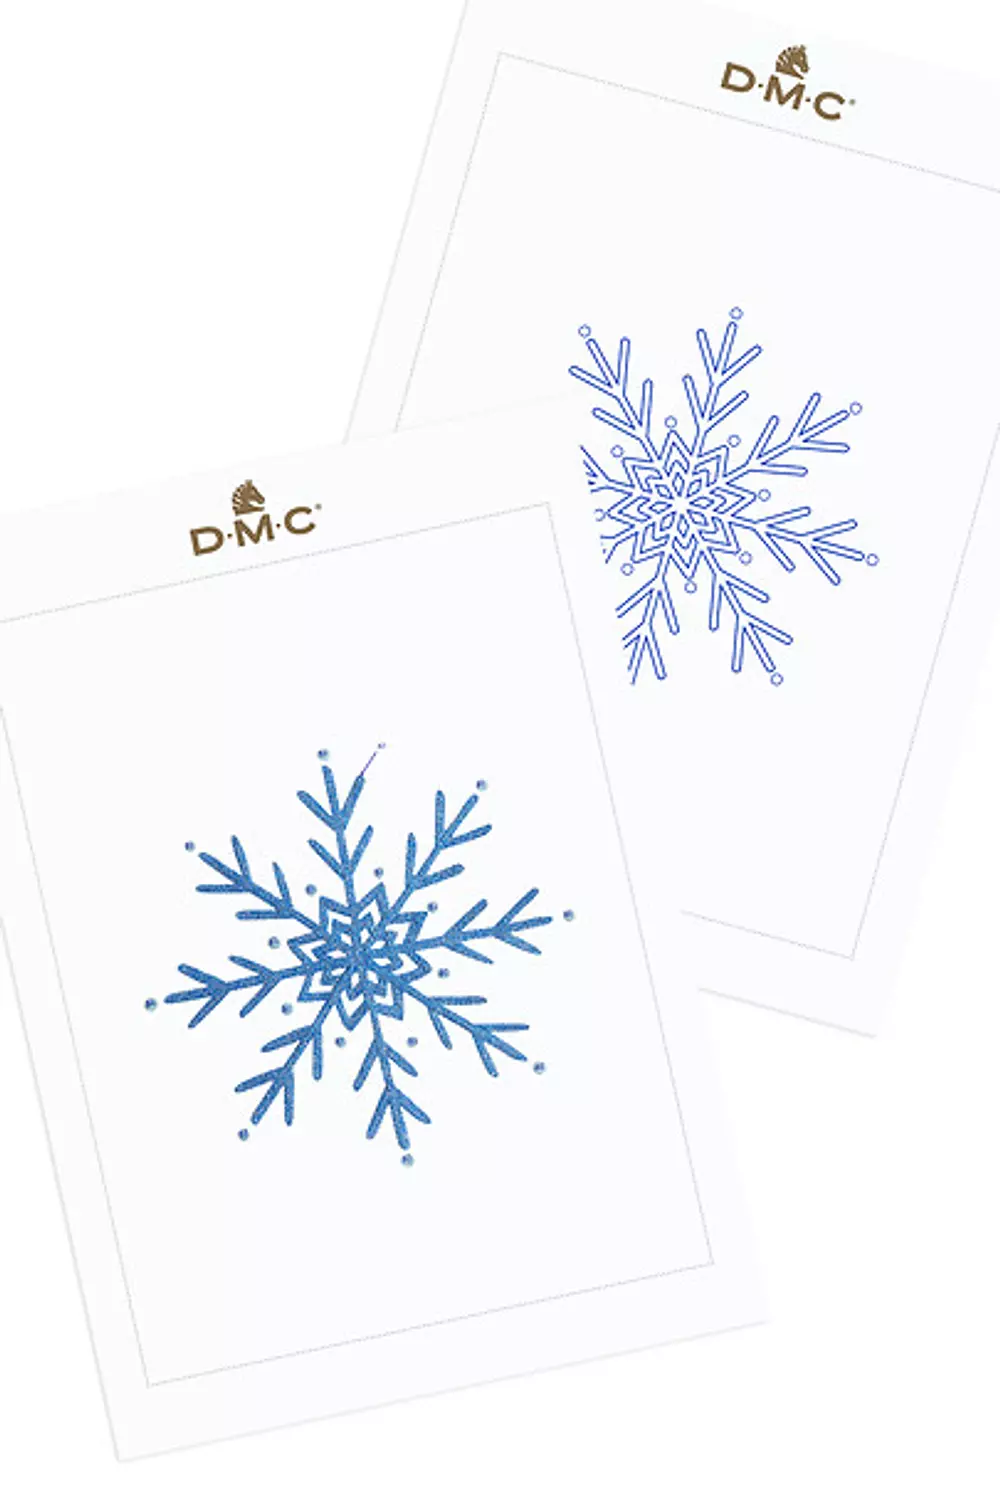 Snowflake - DMC